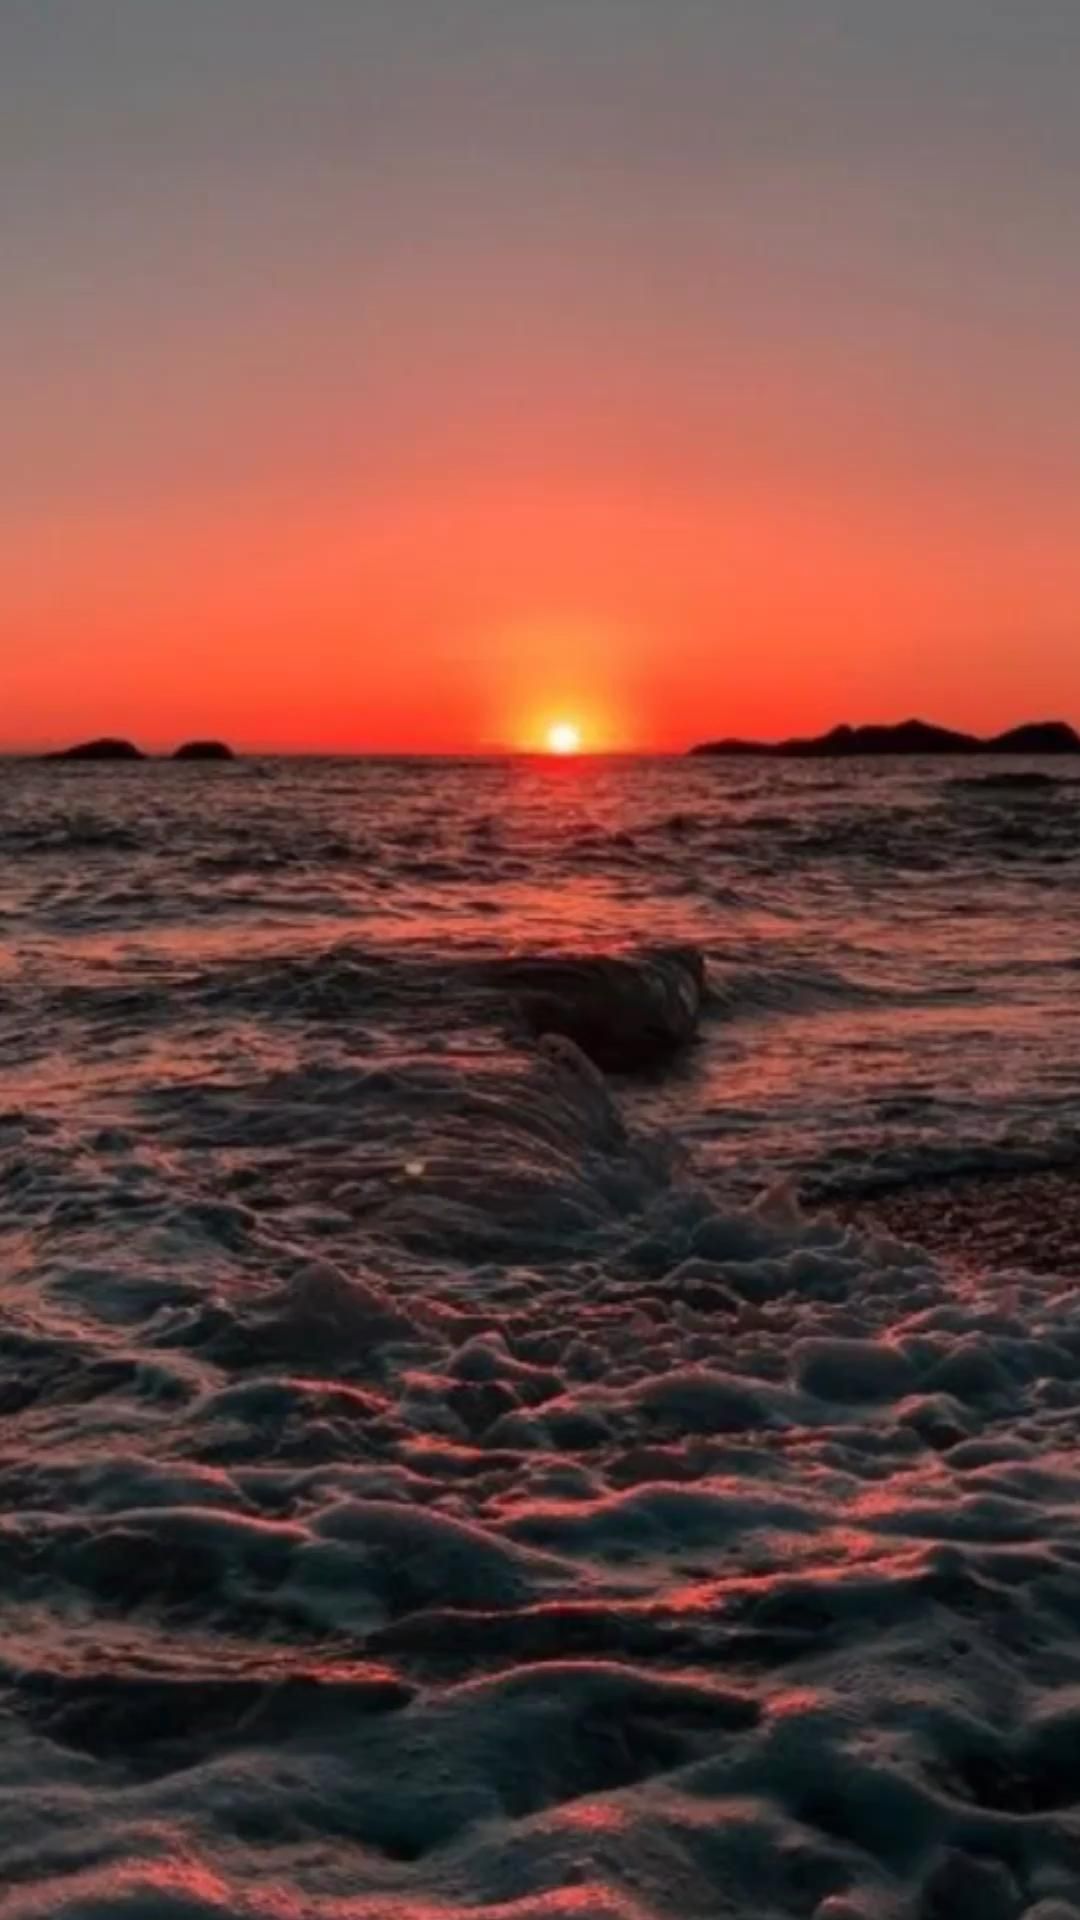 Sunset over the ocean - Sunset